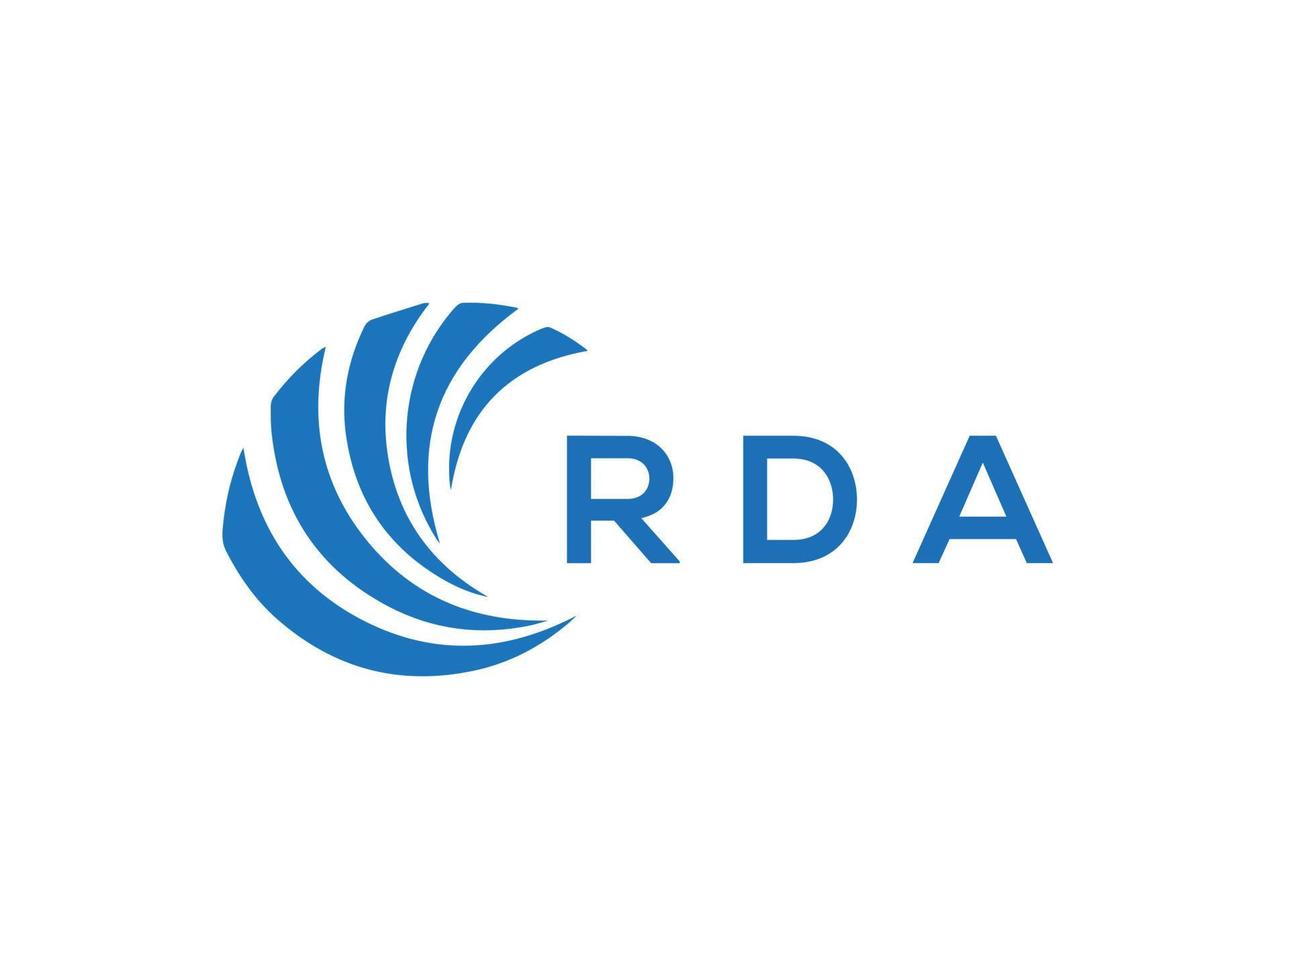 rda letra logo diseño en blanco antecedentes. rda creativo circulo letra logo concepto. rda letra diseño. vector